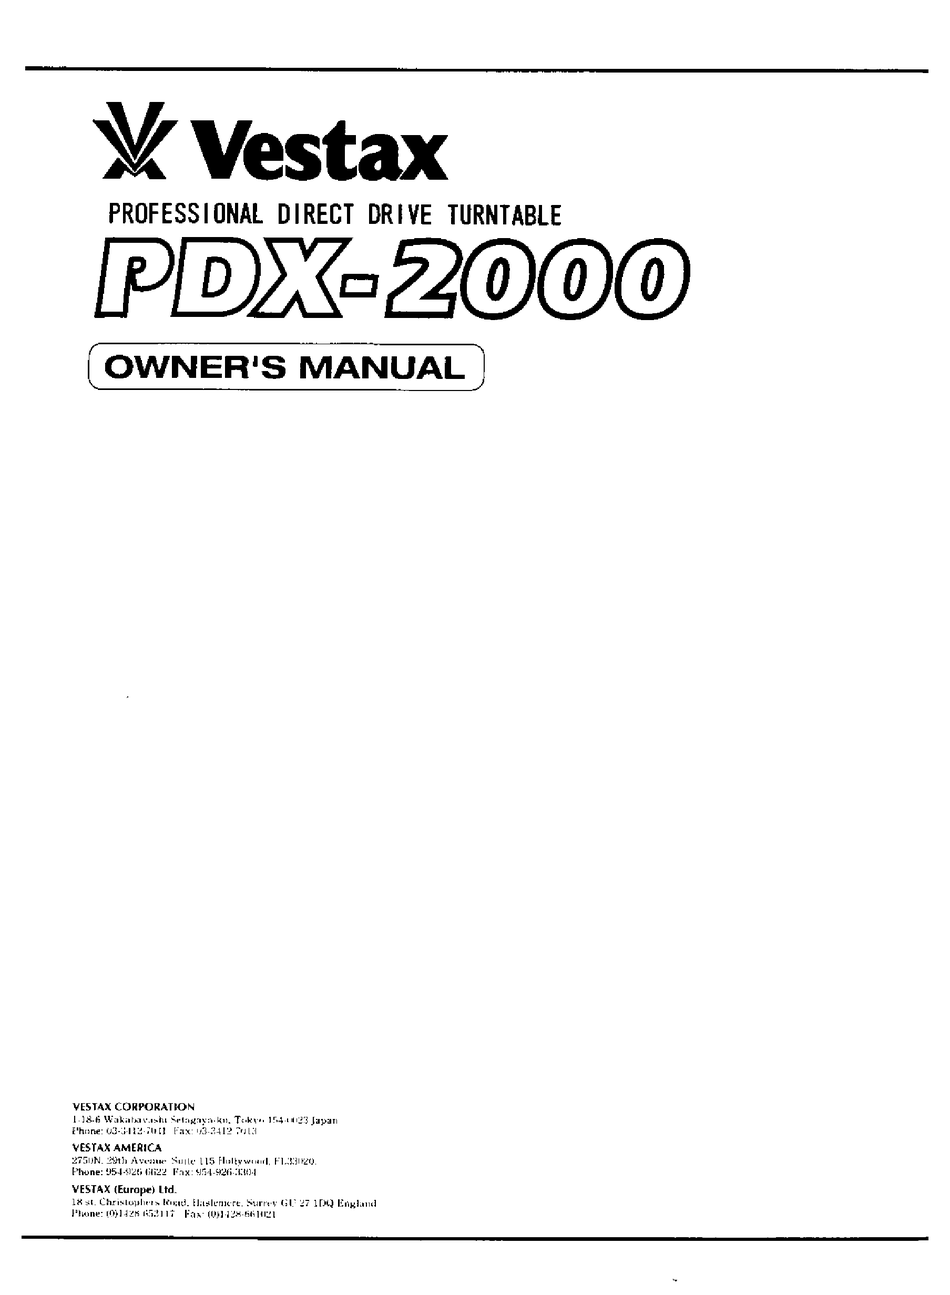 VESTAX PDX-2000 OWNER'S MANUAL Pdf Download | ManualsLib